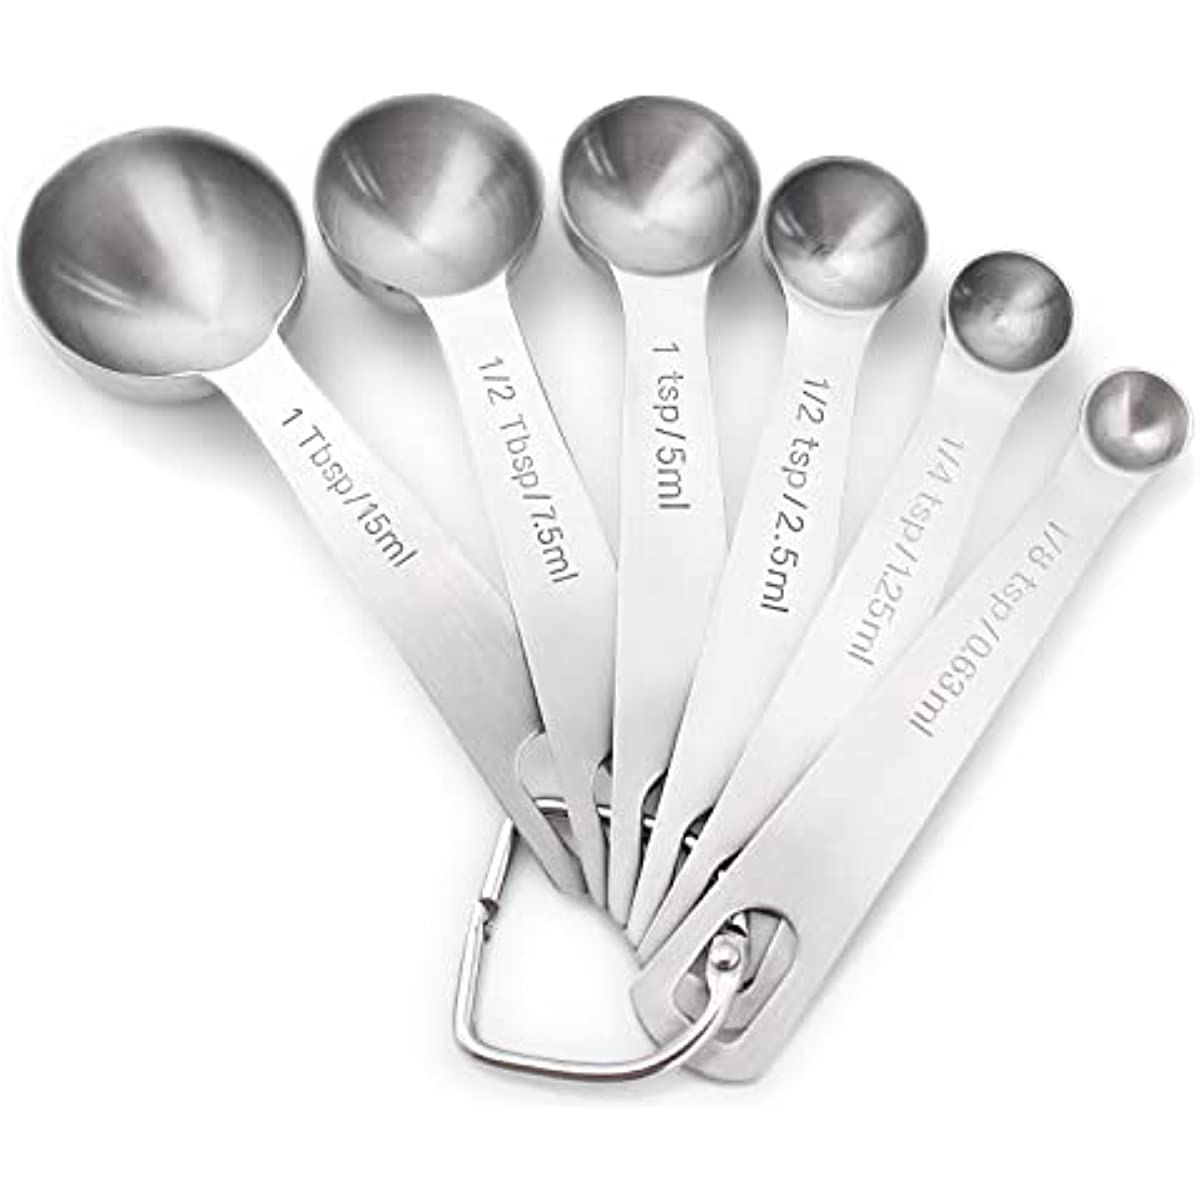 Measuring Spoons, Premium Heavy Duty 18/8 Stainless Steel